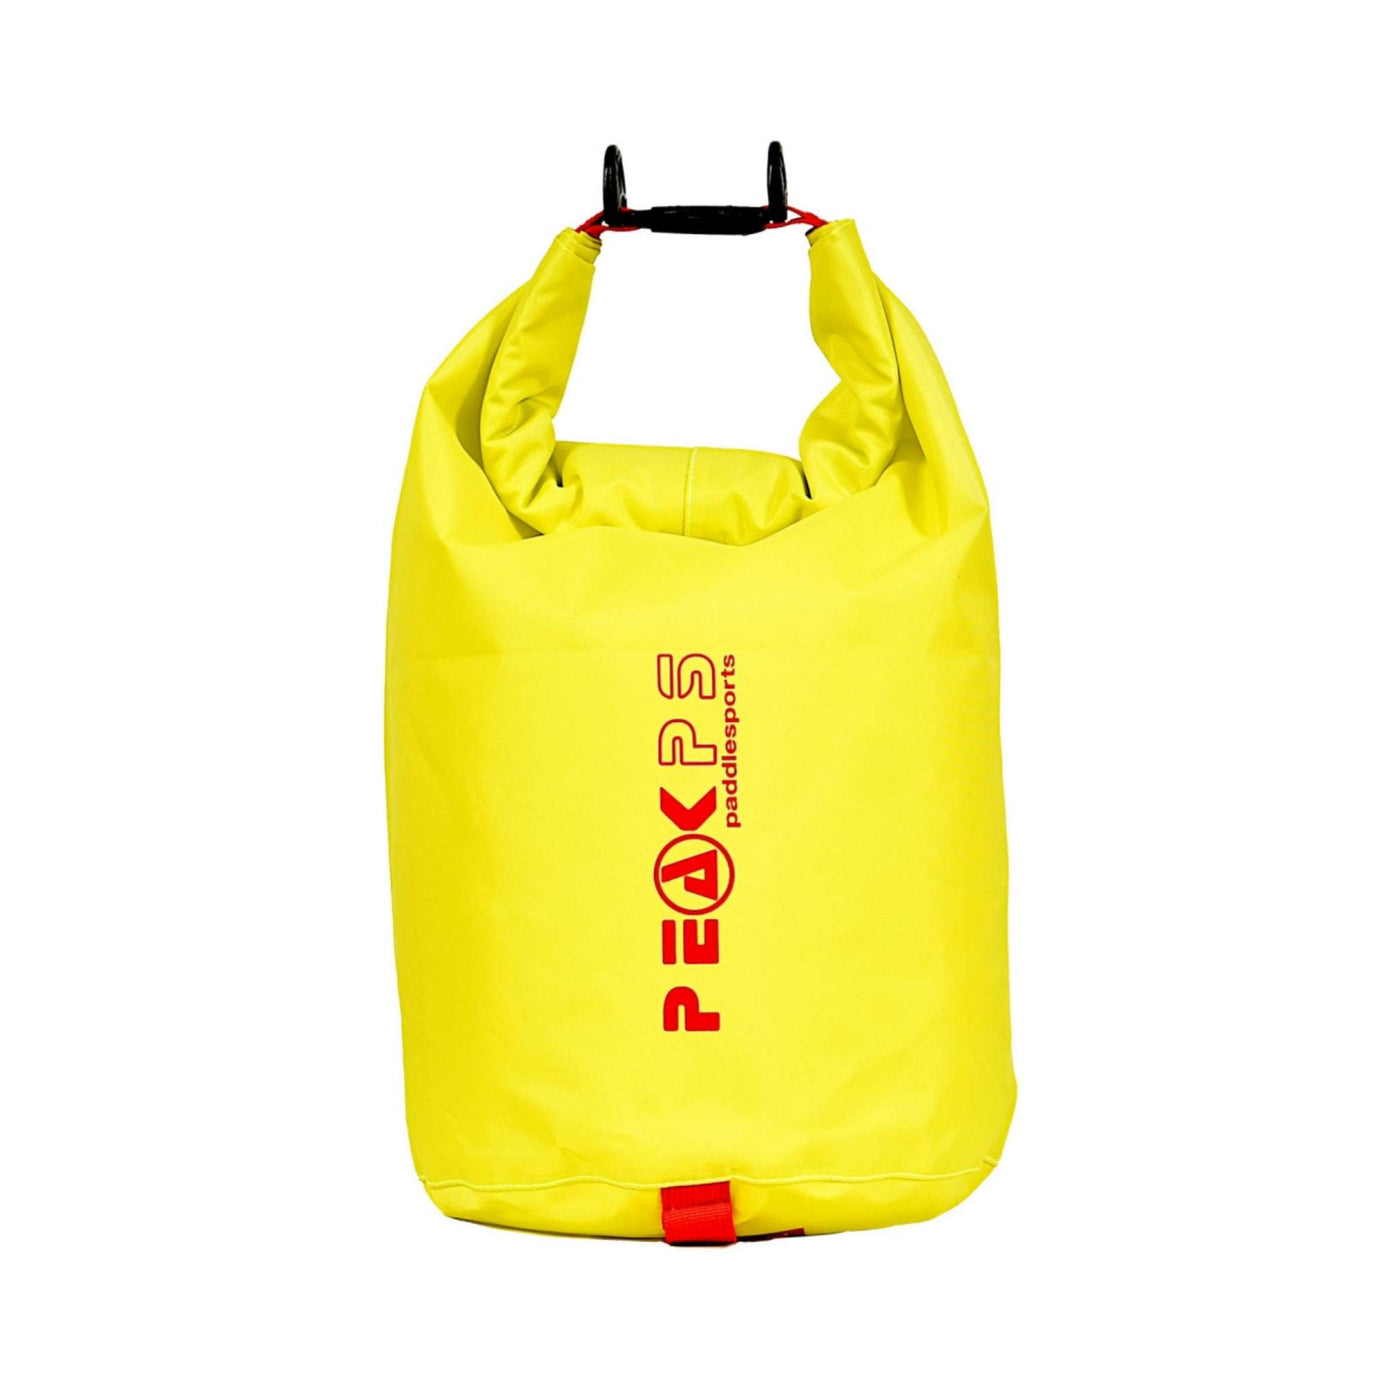 Peak PS Dry Bag Medium - 10L | Dry Bags NZ | Further Faster Christchurch NZ | #lime